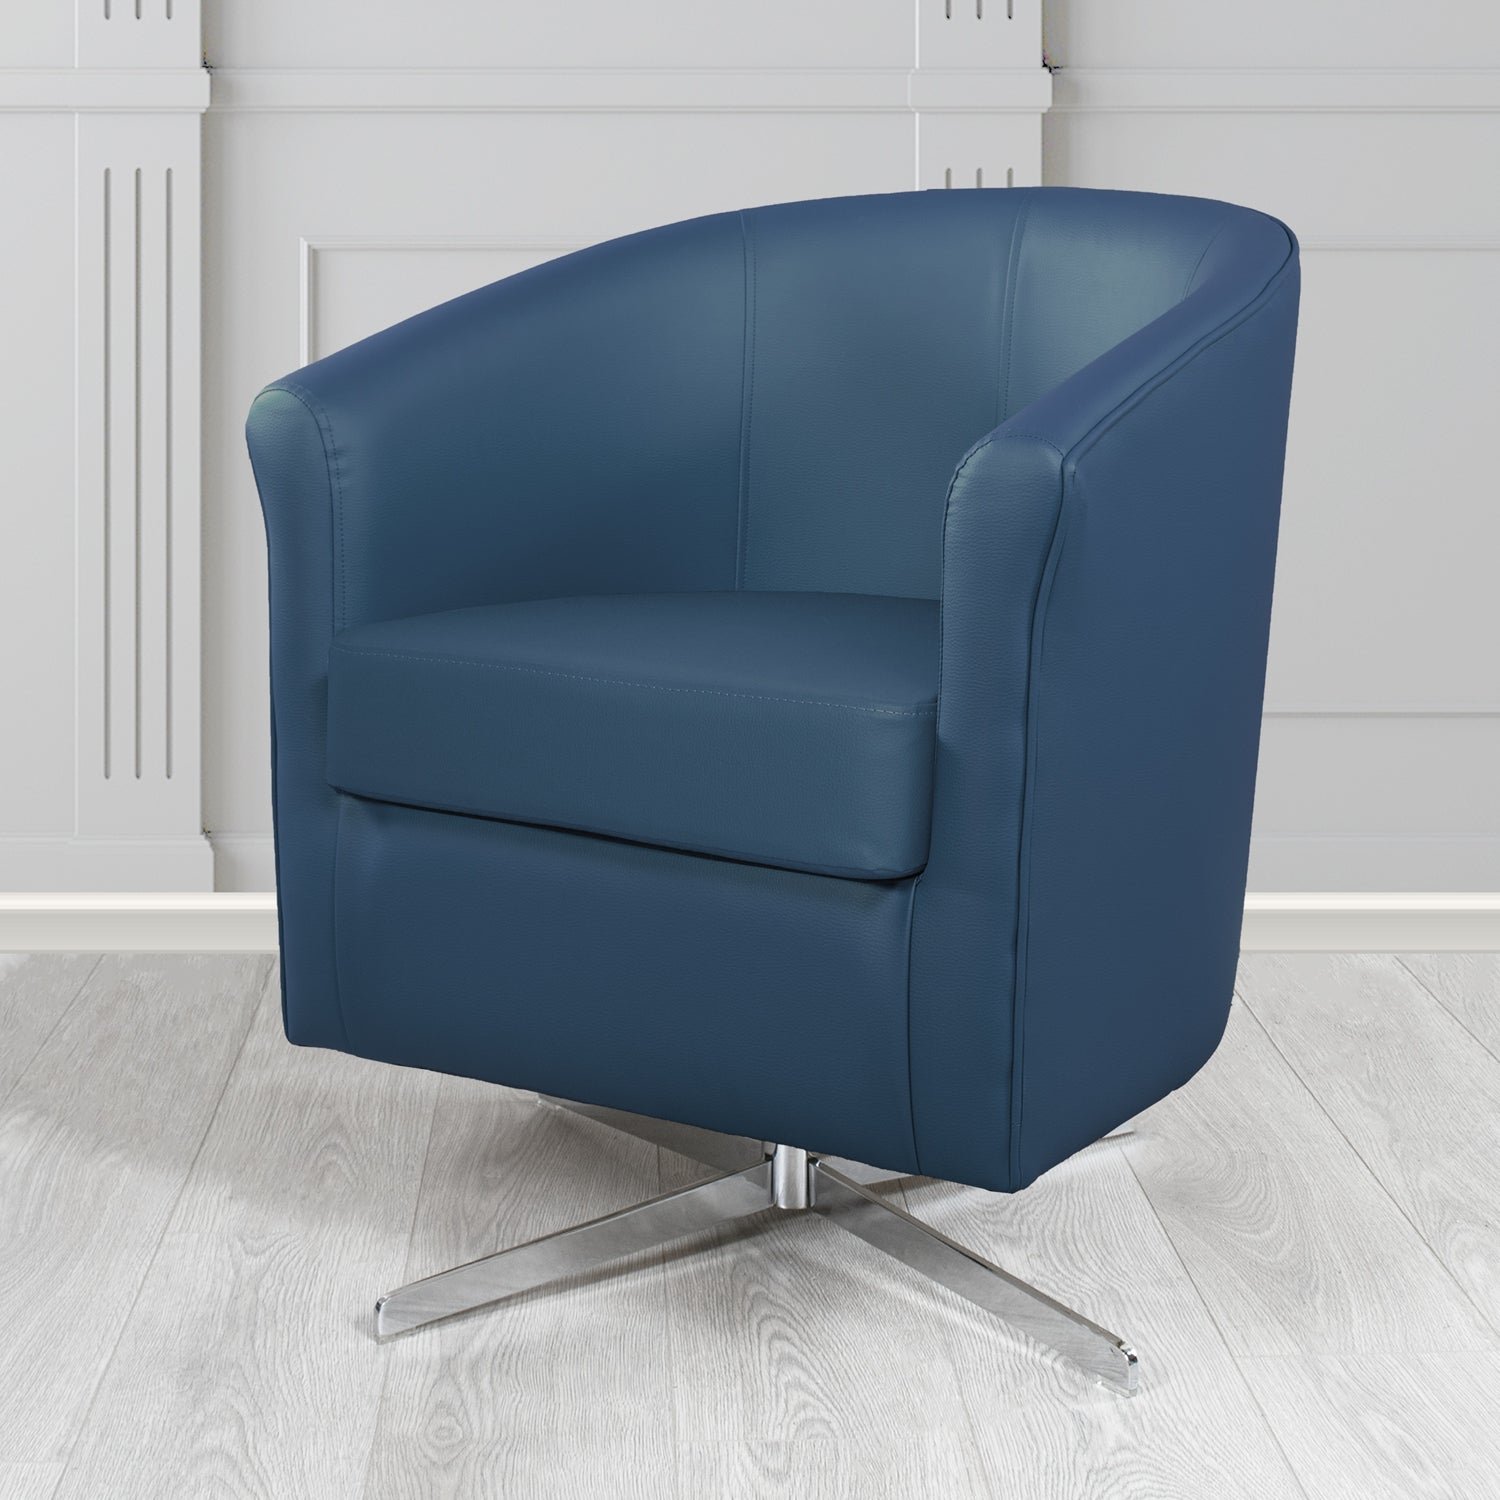 Cannes Swivel Tub Chair in Just Colour Sapphire Blue Crib 5 Faux Leather - The Tub Chair Shop